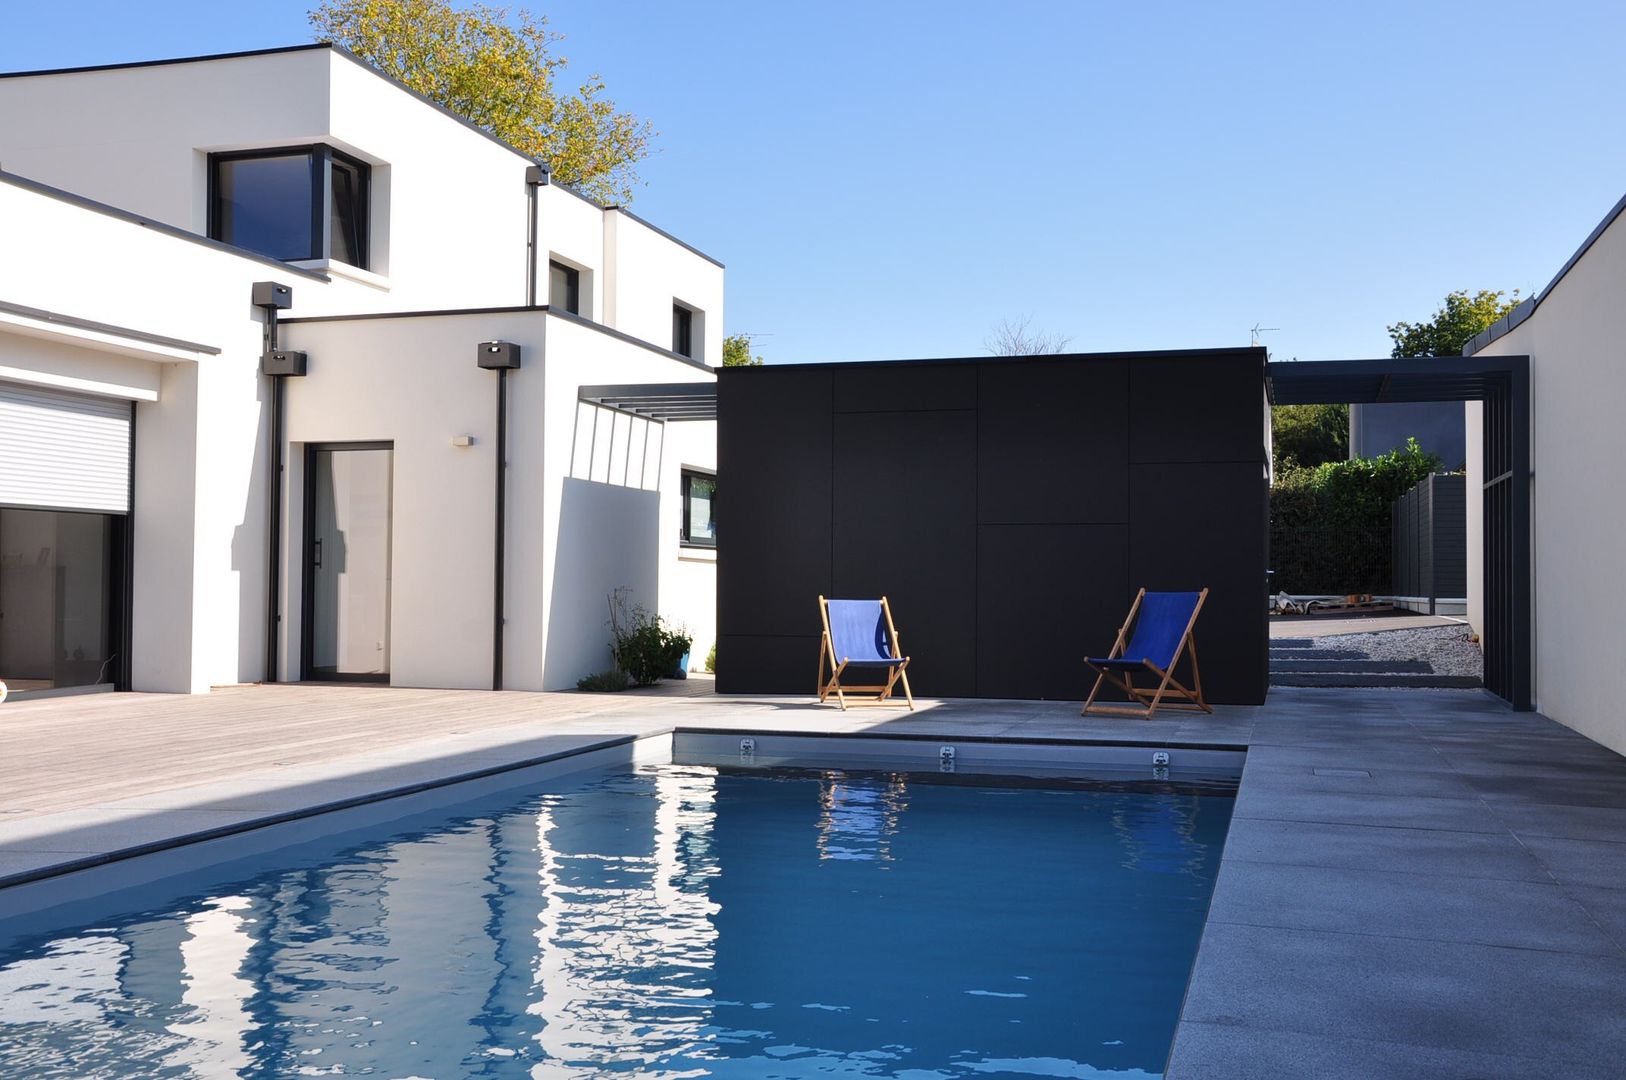 Des pool-house aussi !, Wellhome - Bebamboo Wellhome - Bebamboo Pool design ideas